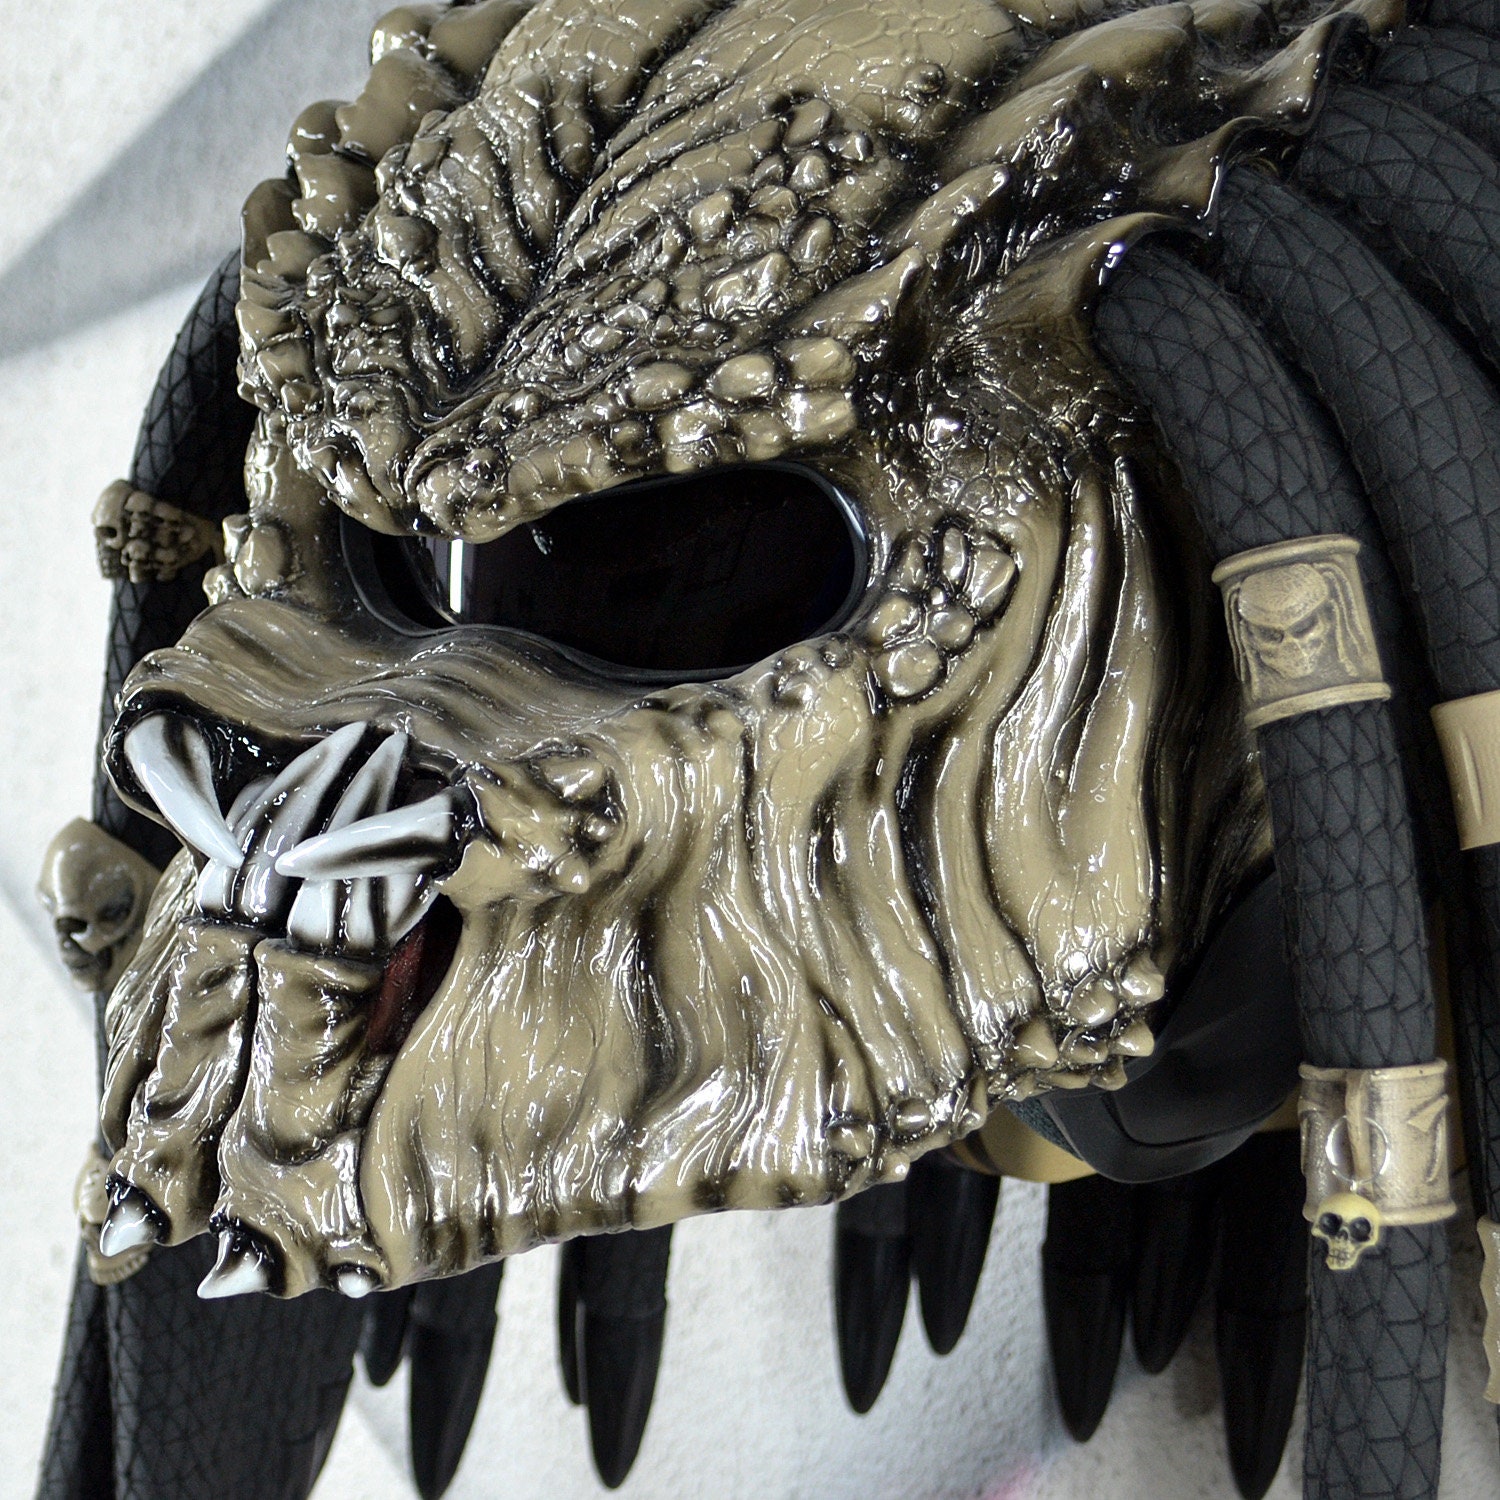  mlnyitus Movie Mask for Predator Cosplay Game Helmet